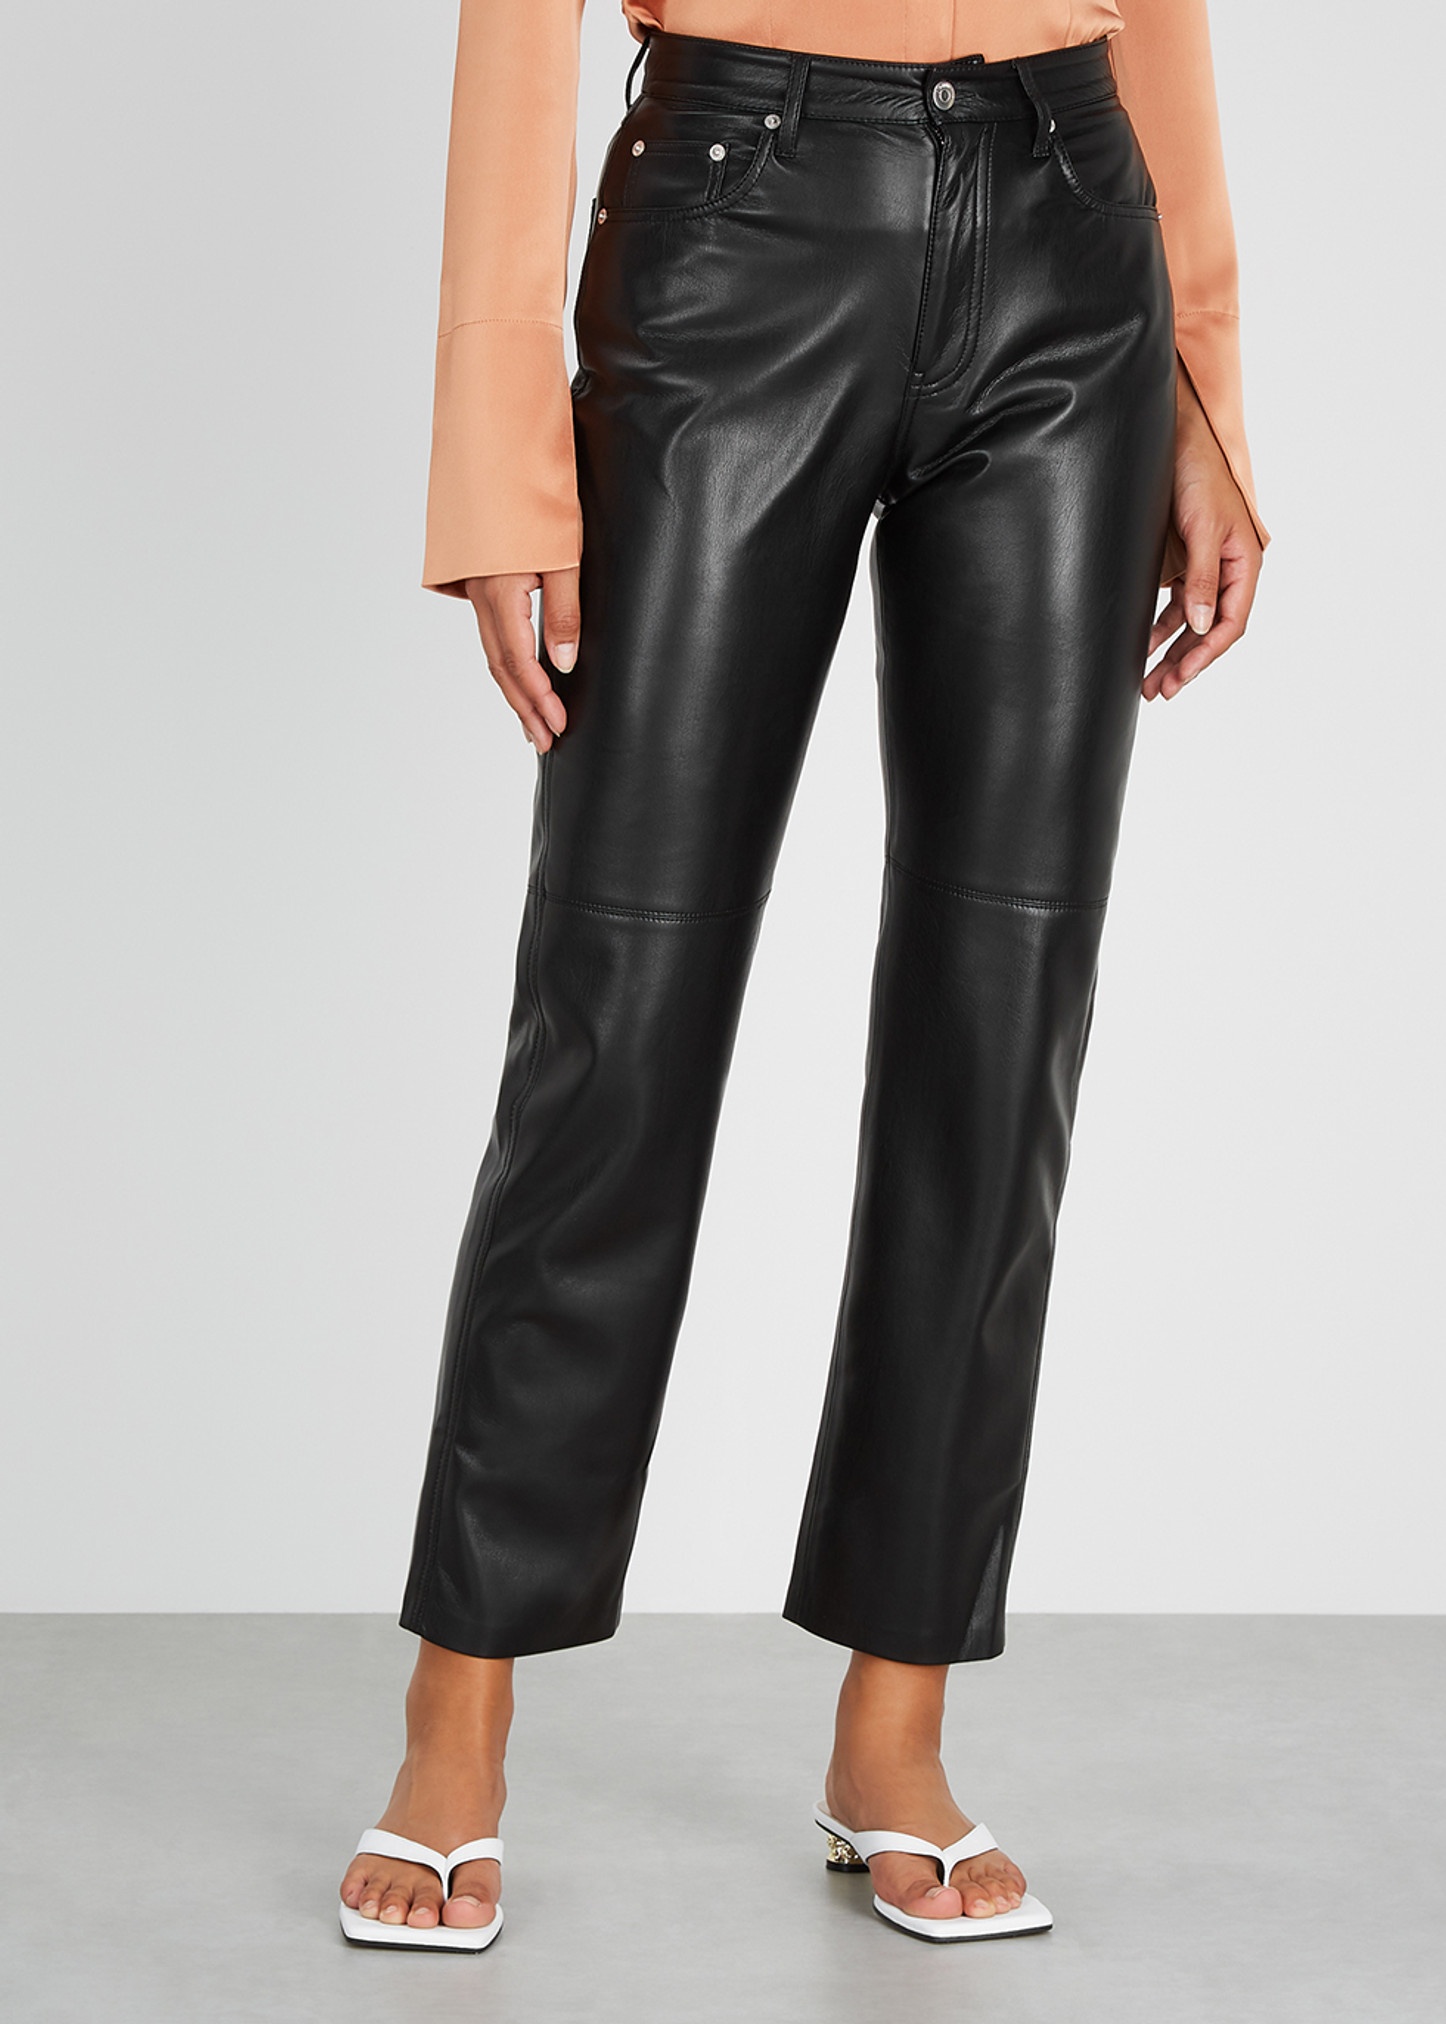 Vinni black faux leather trousers - 2